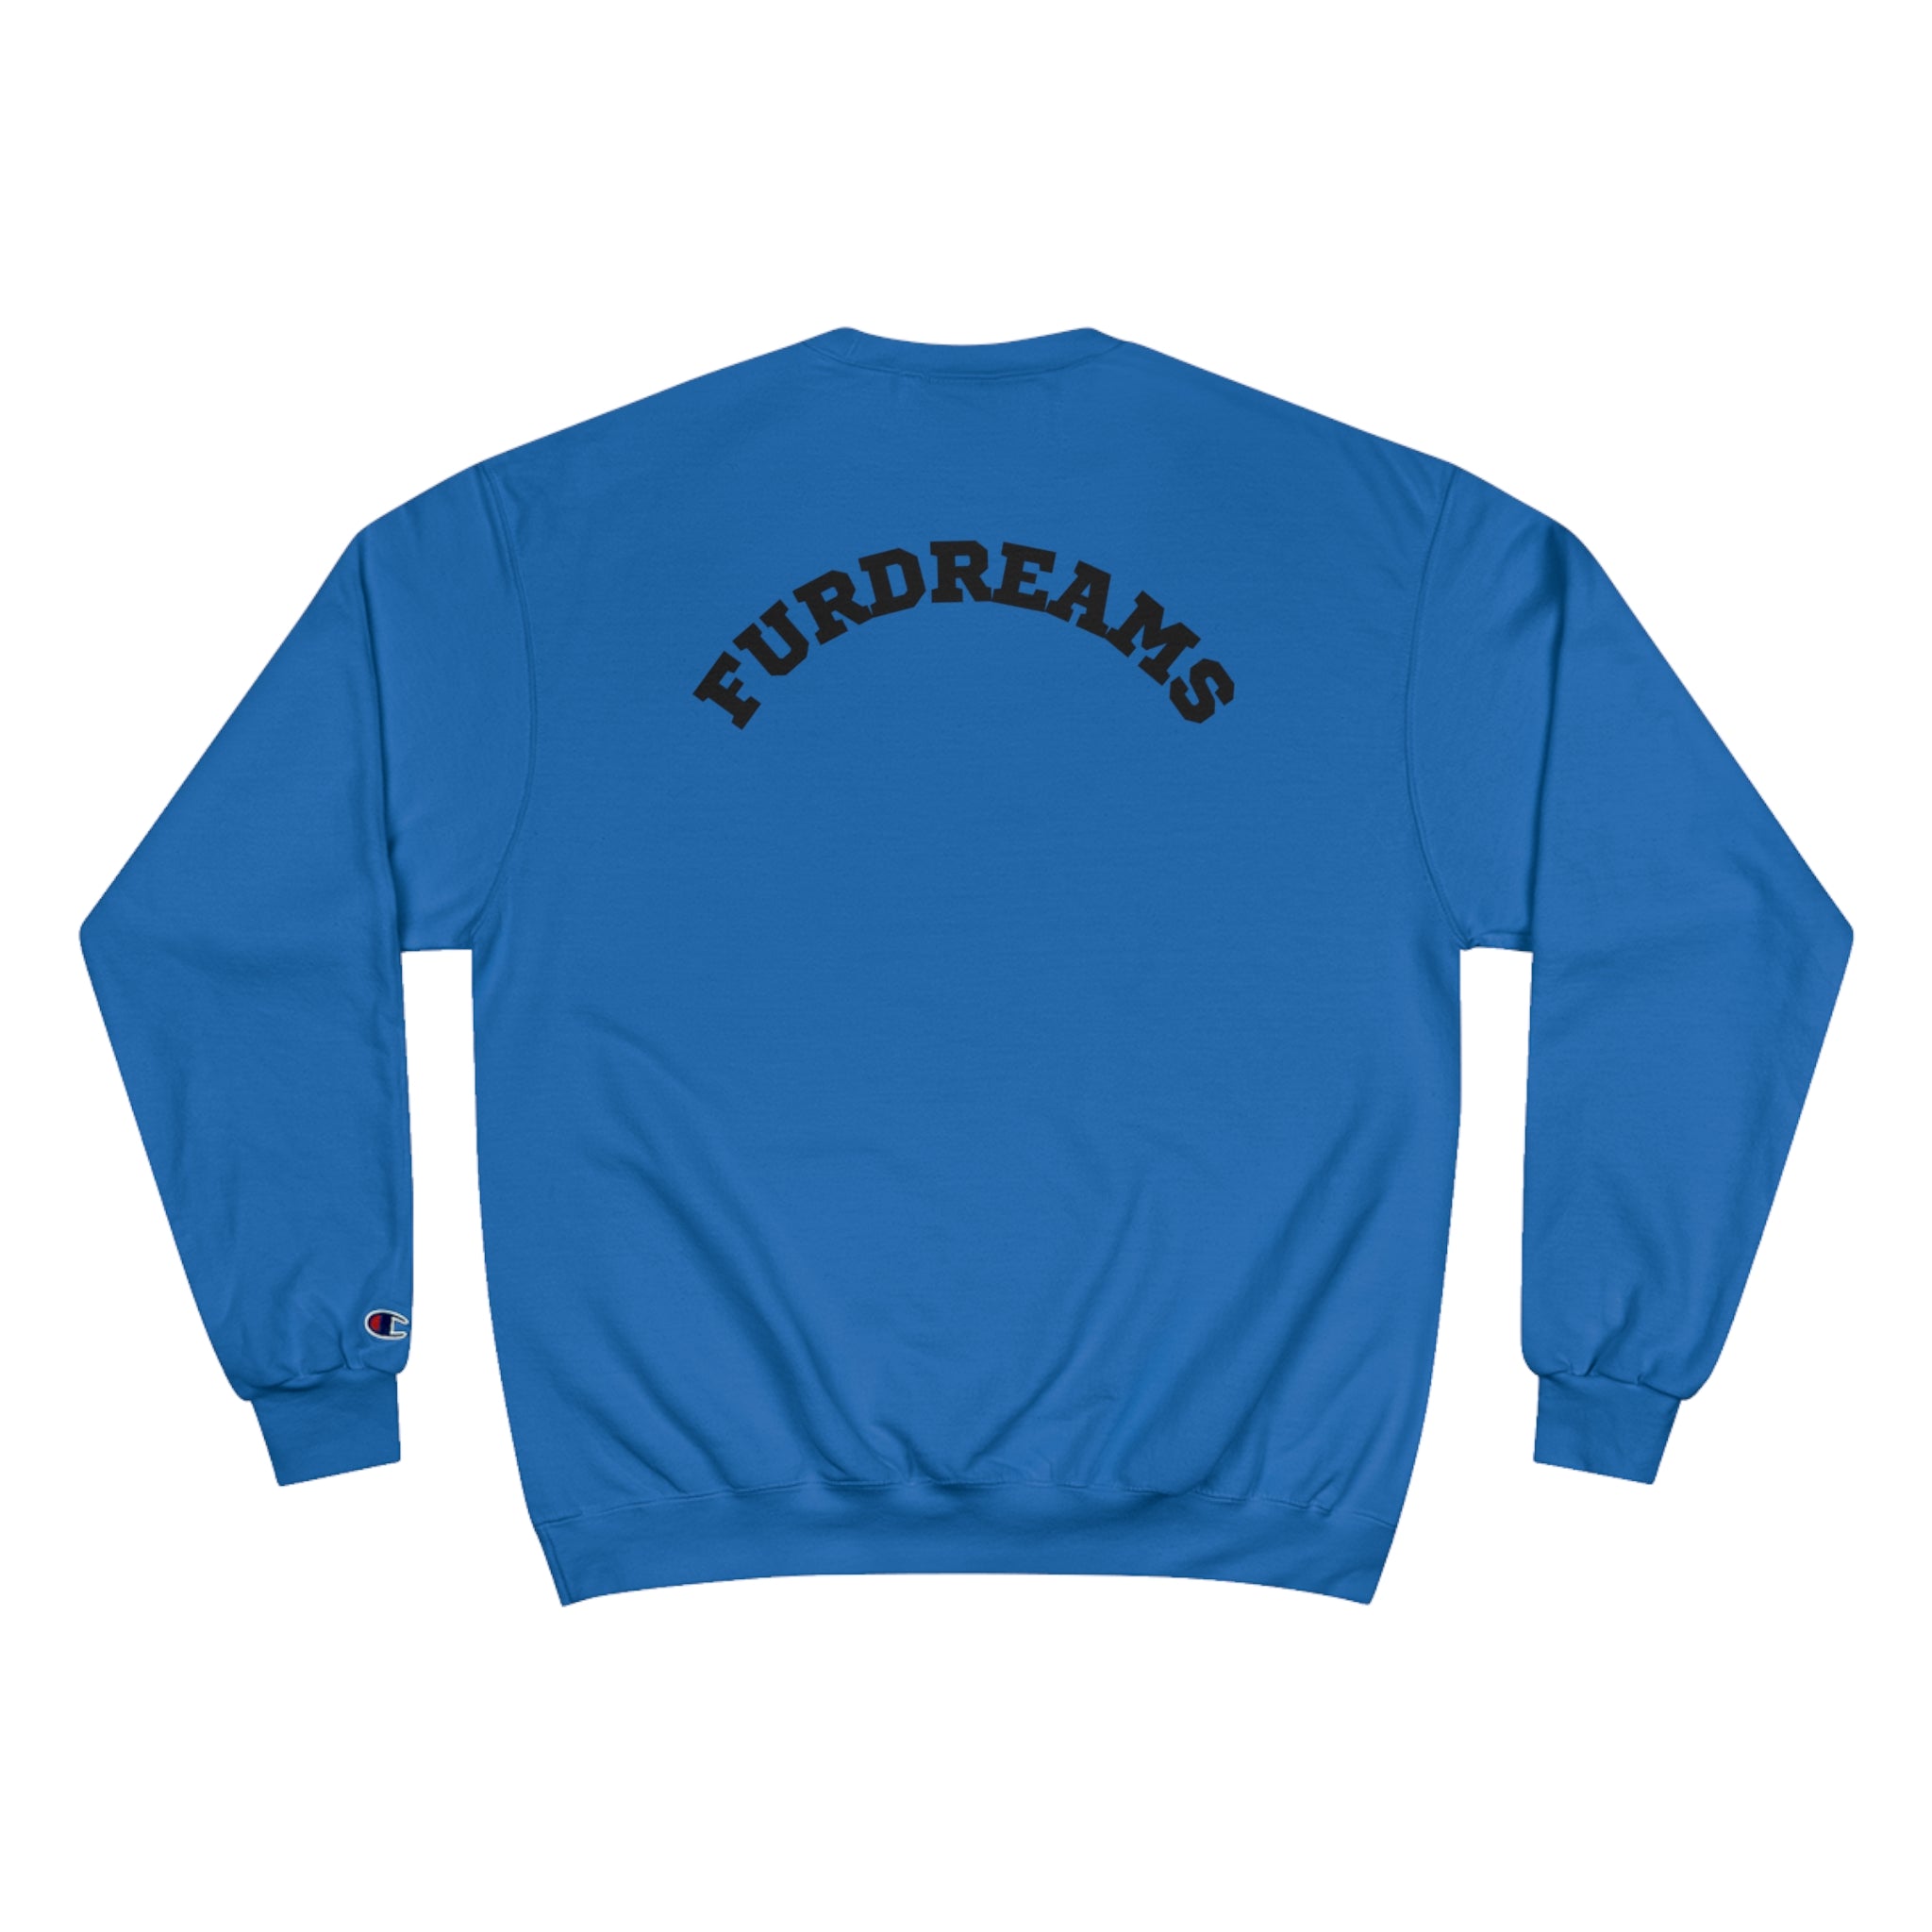 Lady FURDreams “Earth” Champion Sweatshirt